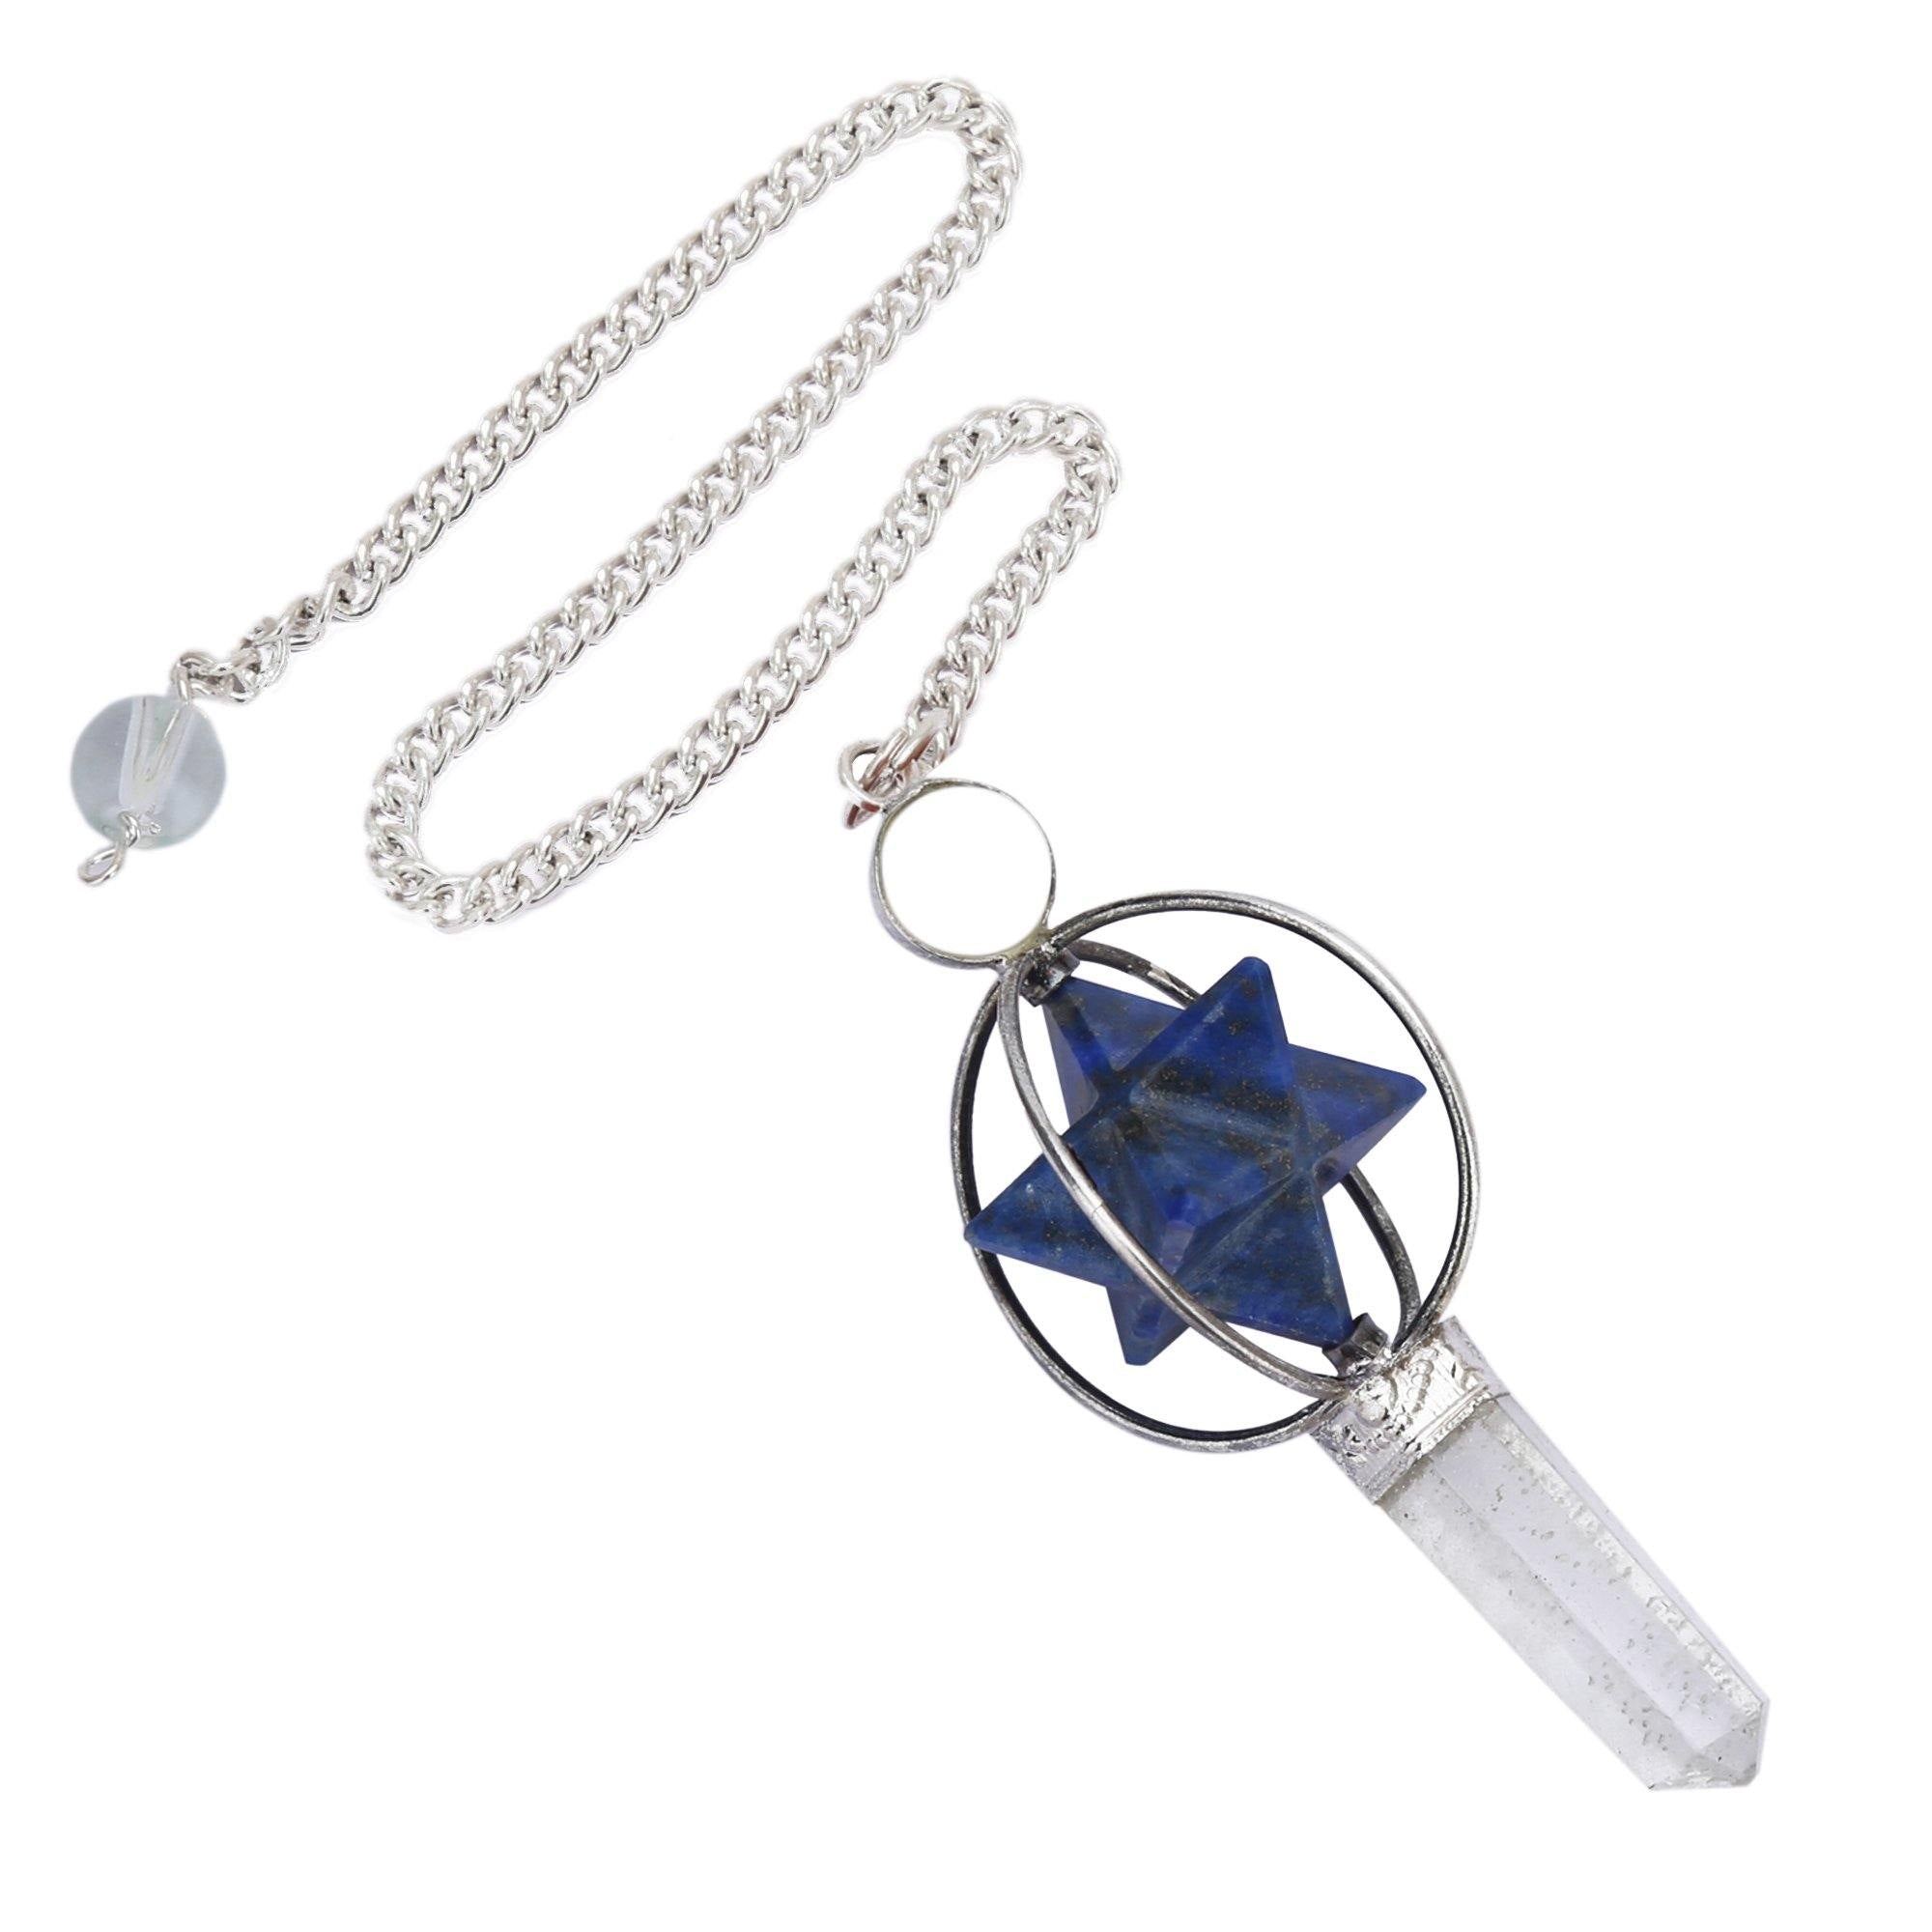 Healing Crystals - Wholesale Lapis Lazuli Merkabah Pendulum